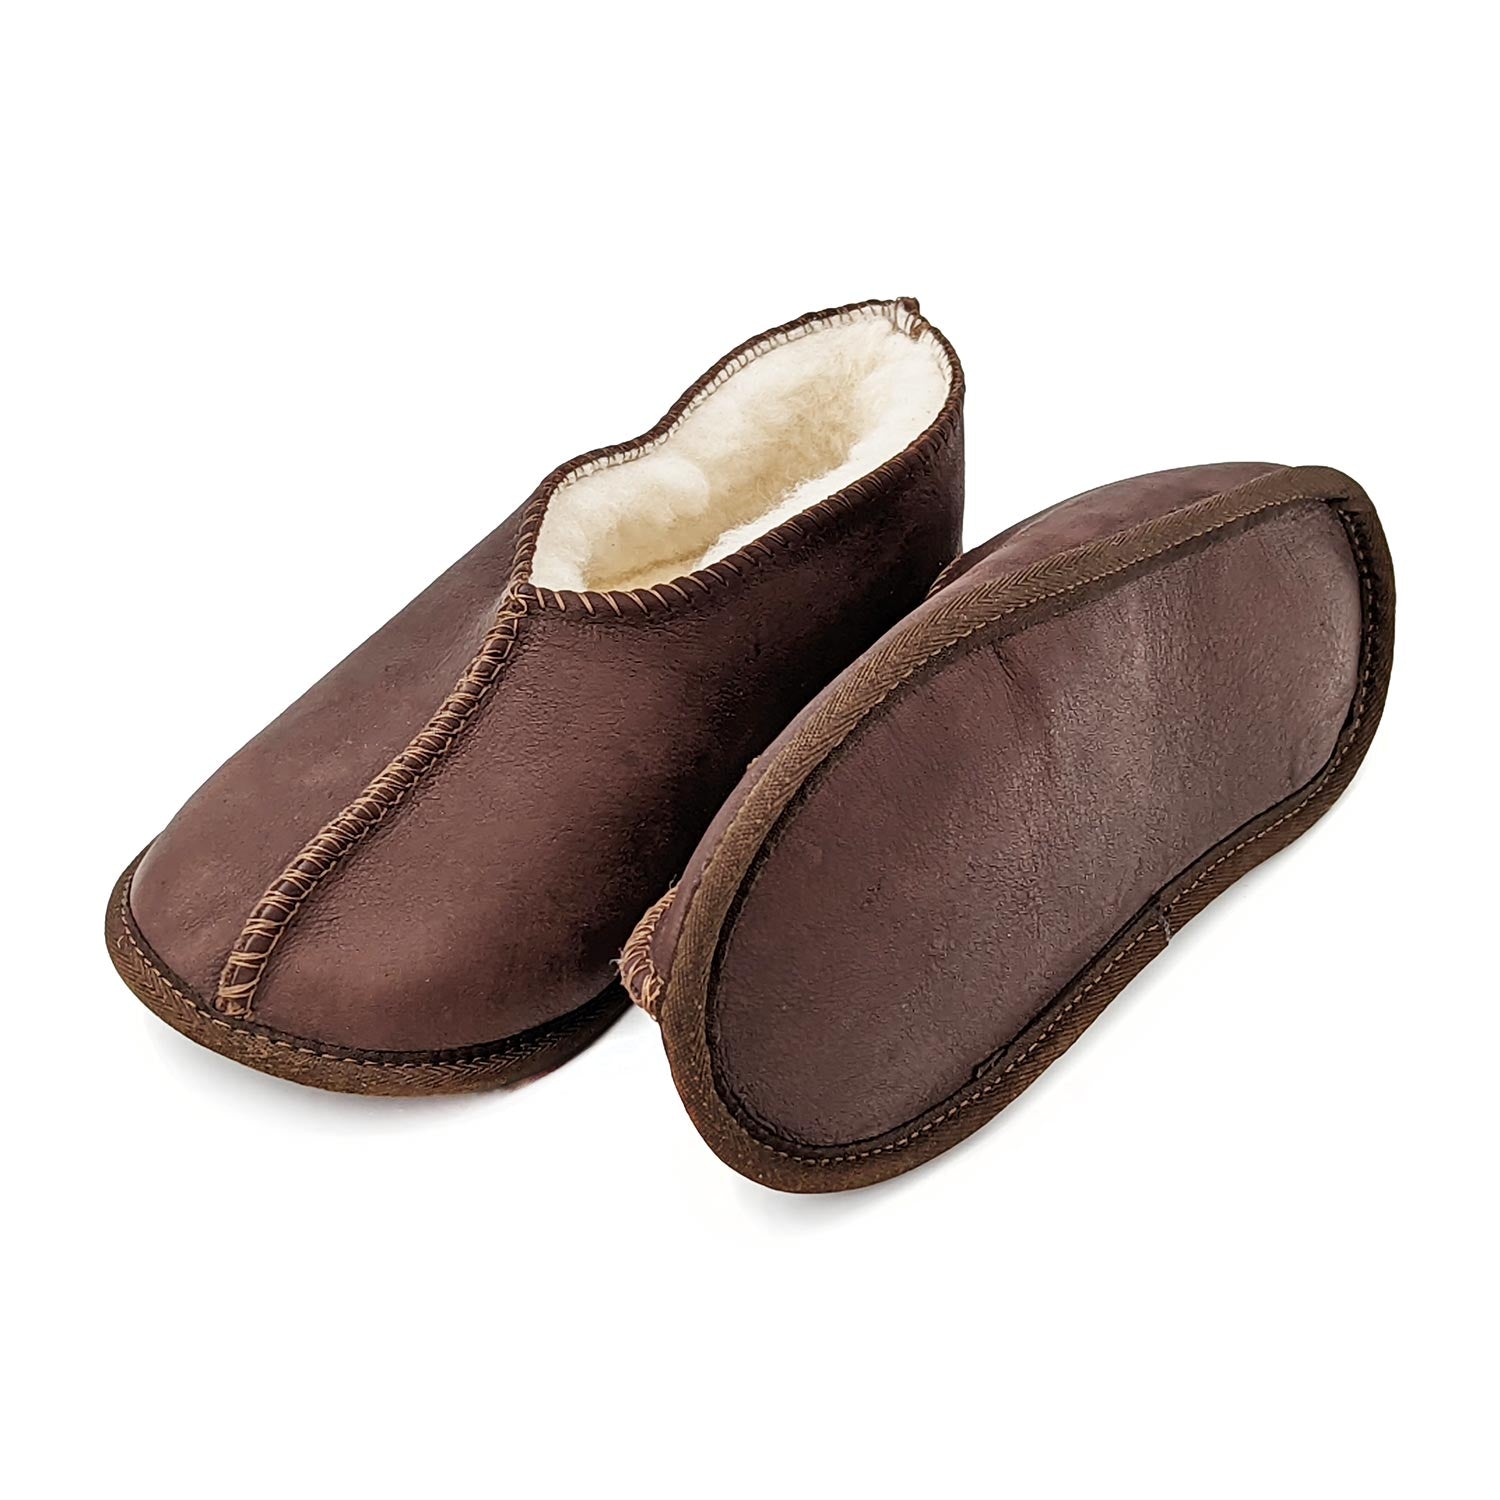 Karu Schloffy Choc Brown Leather & Wool Soft Sole Slippers Slippers Karu Slippers